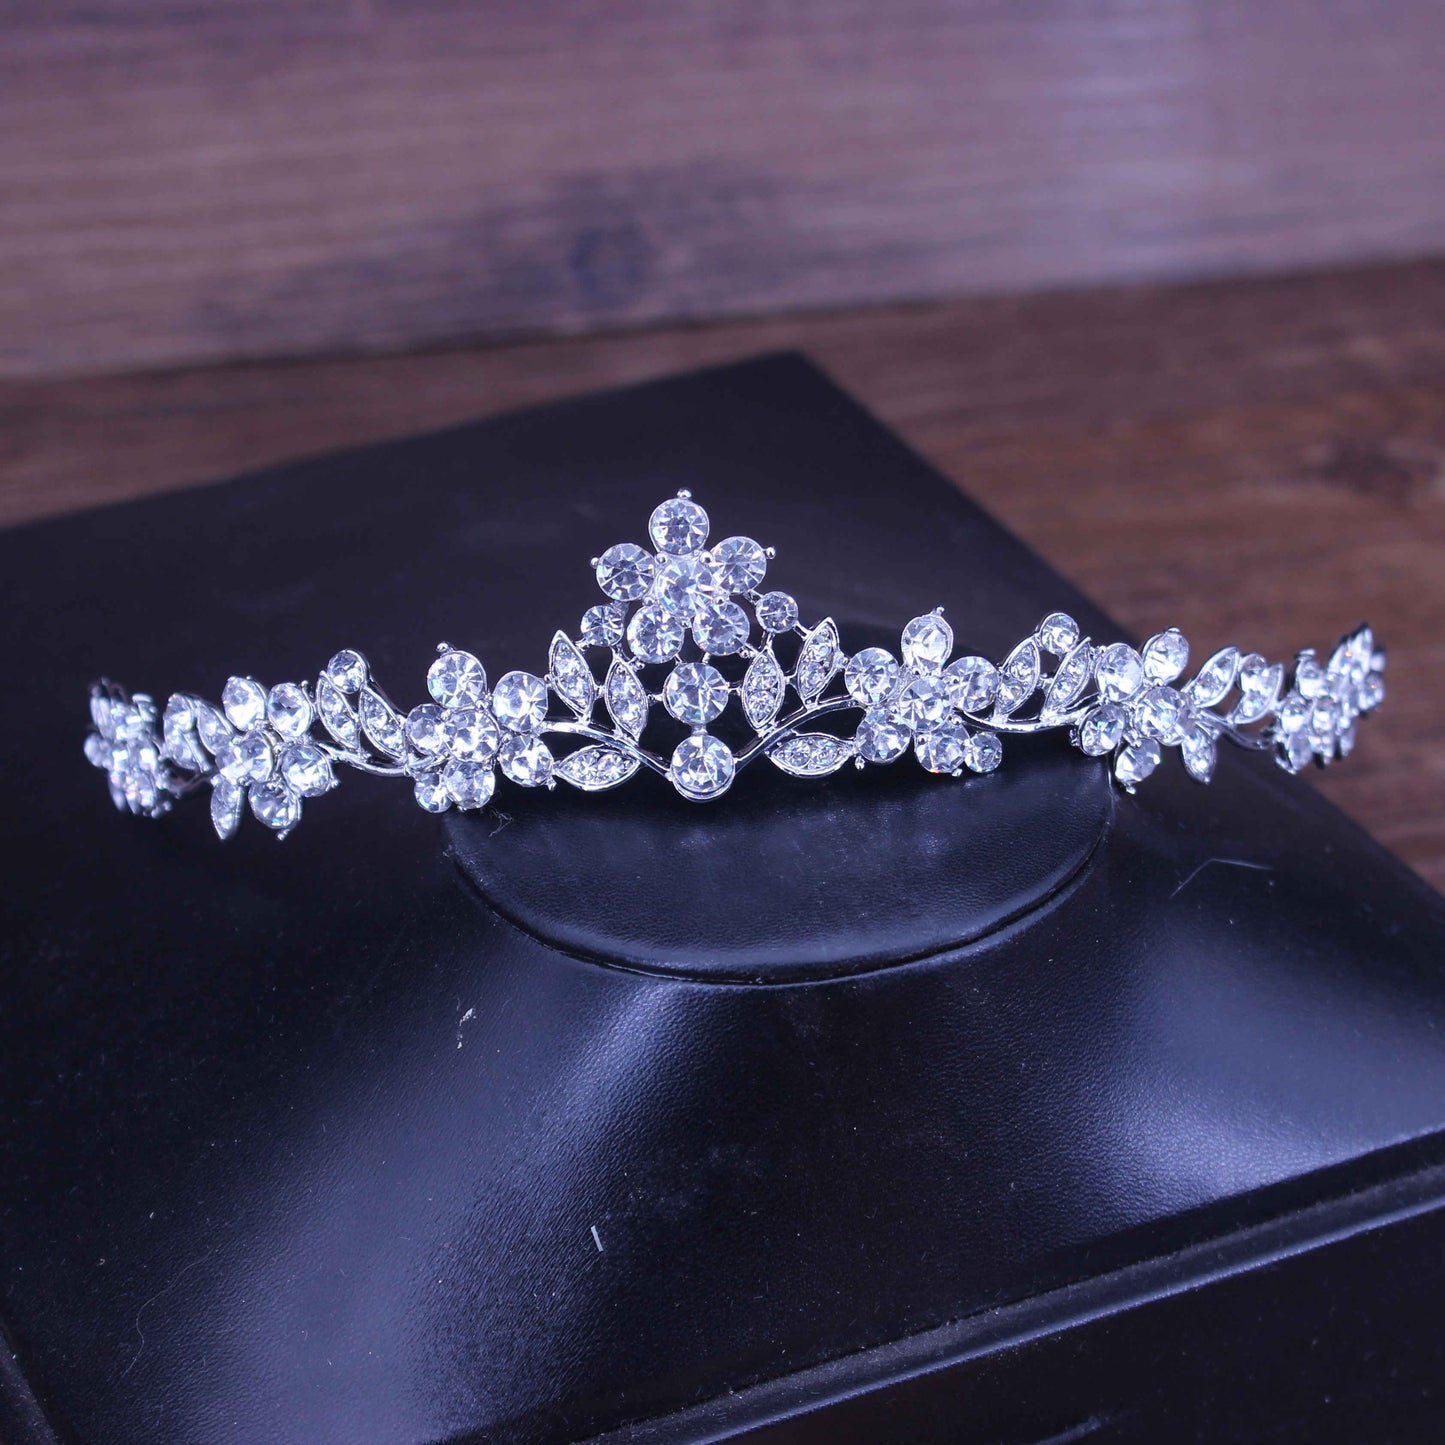 Bridal Tiara with rhinestone crystals